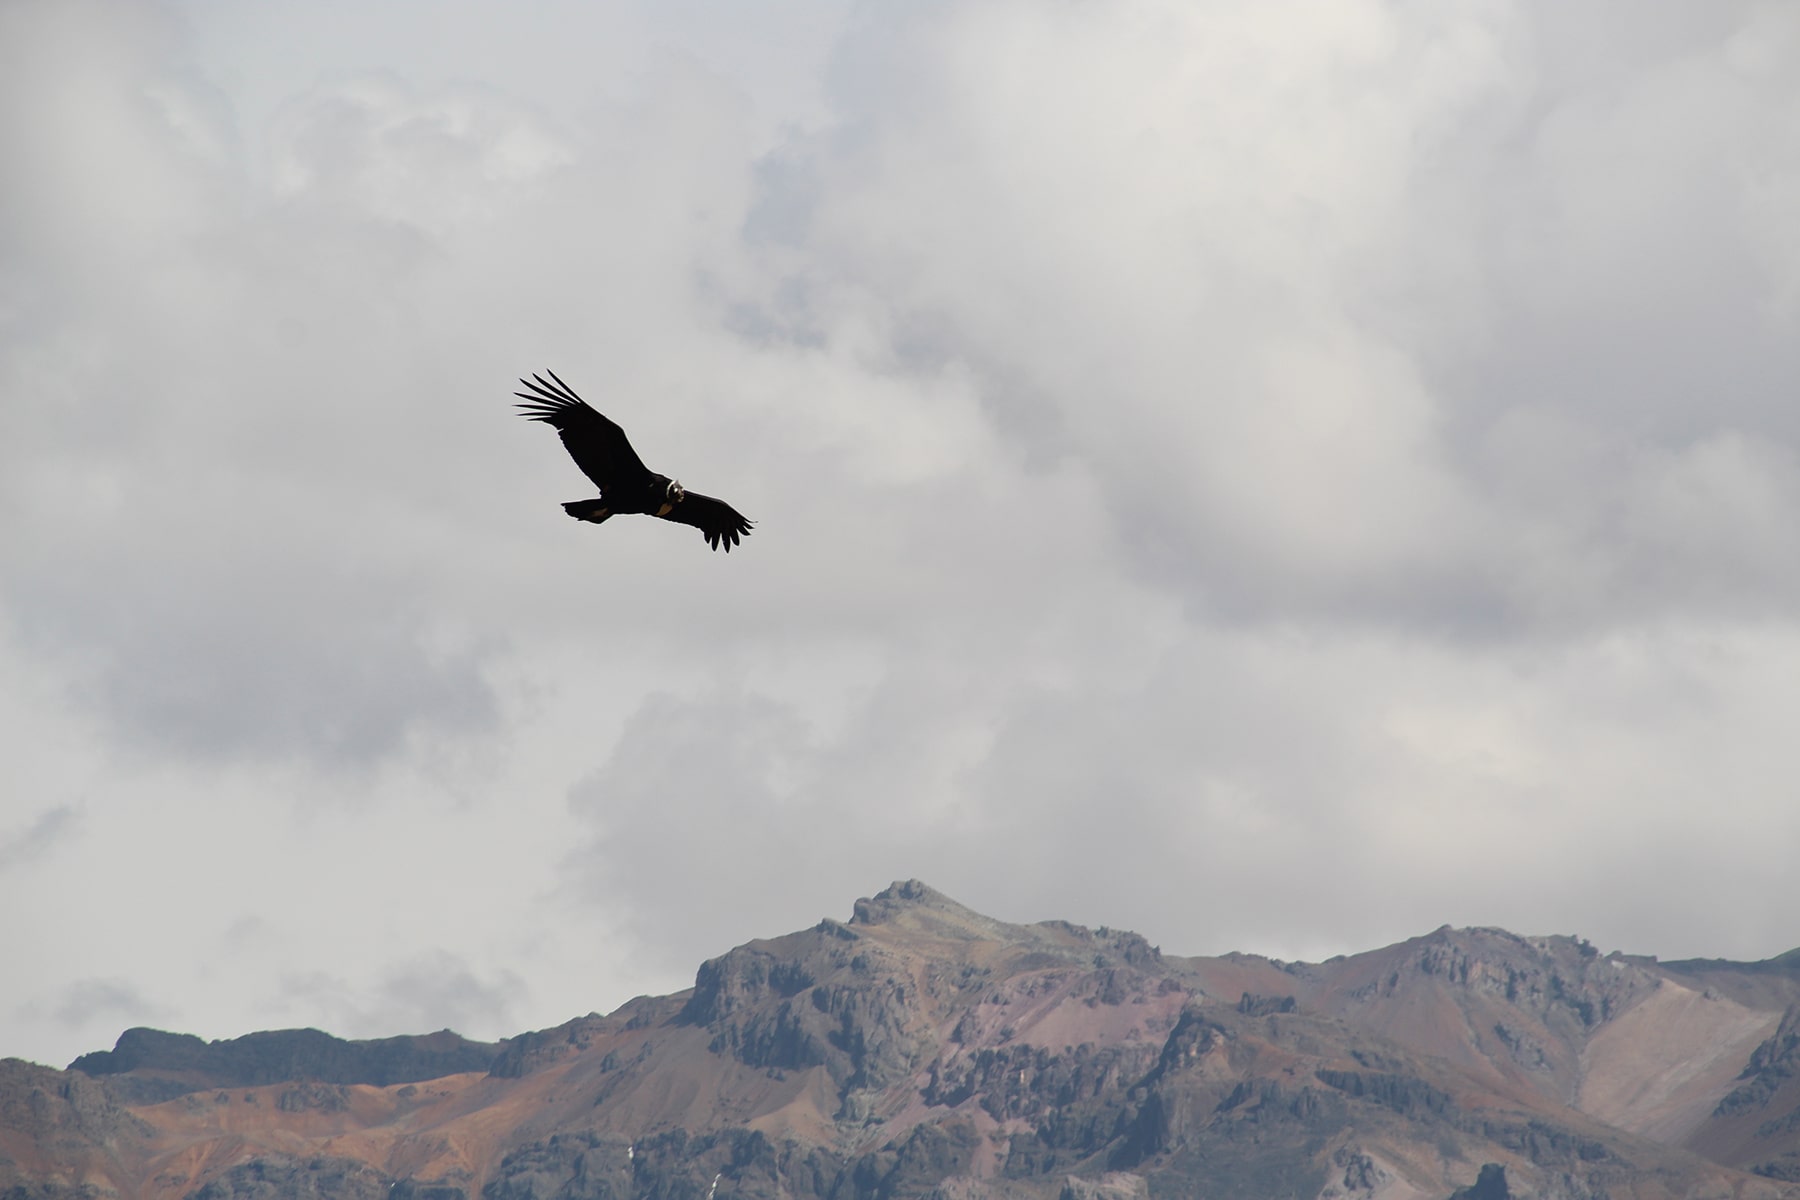 Flight of the condor in Colca Canyon